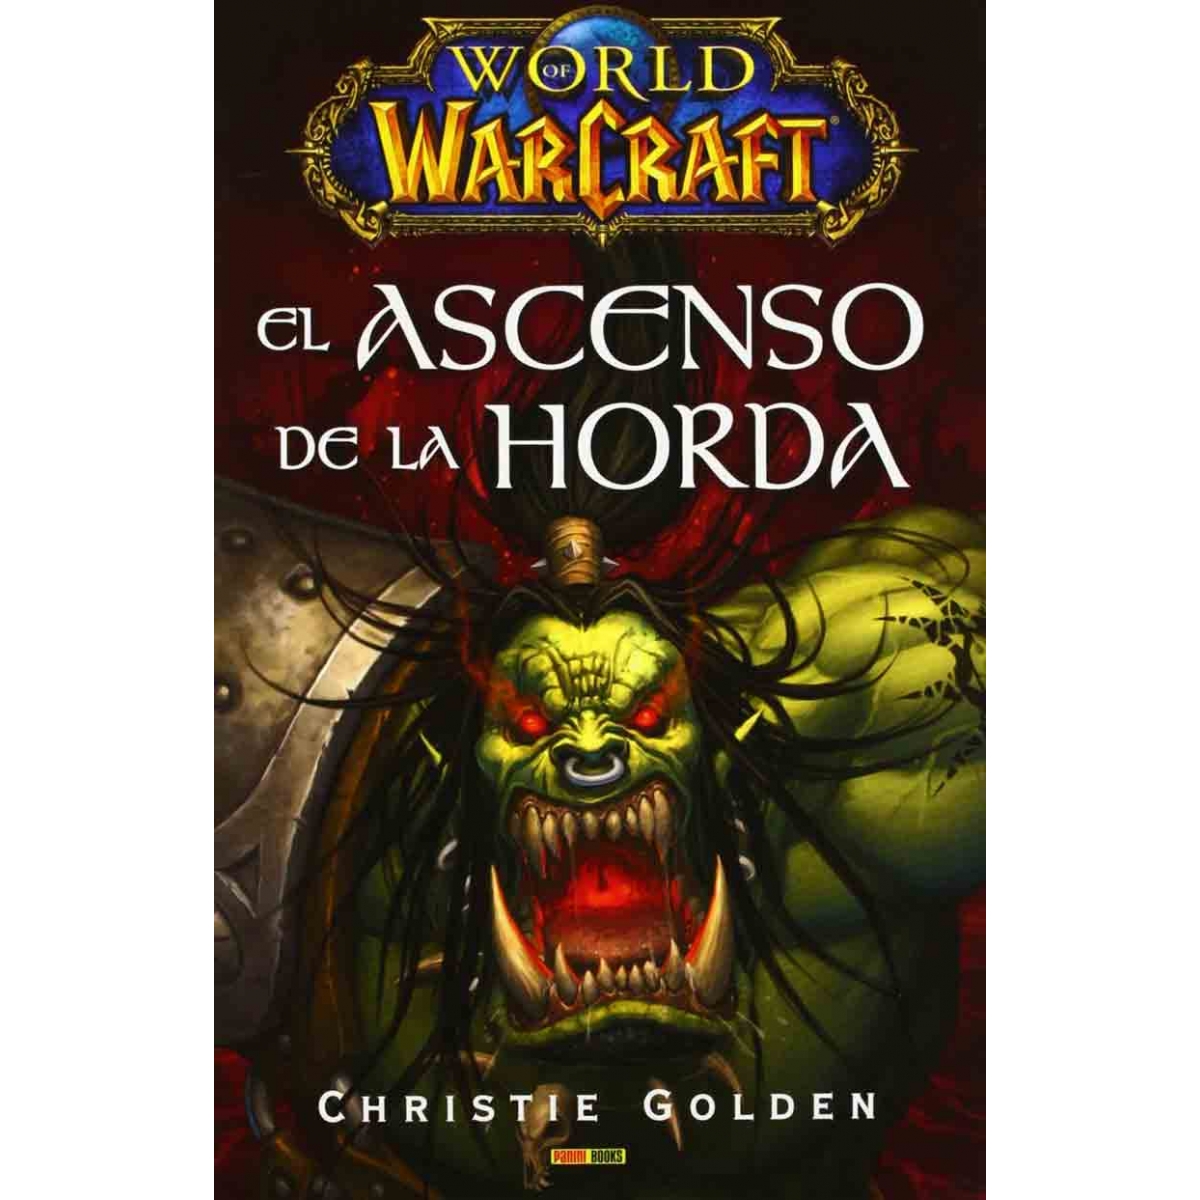 World of Warcraft El...